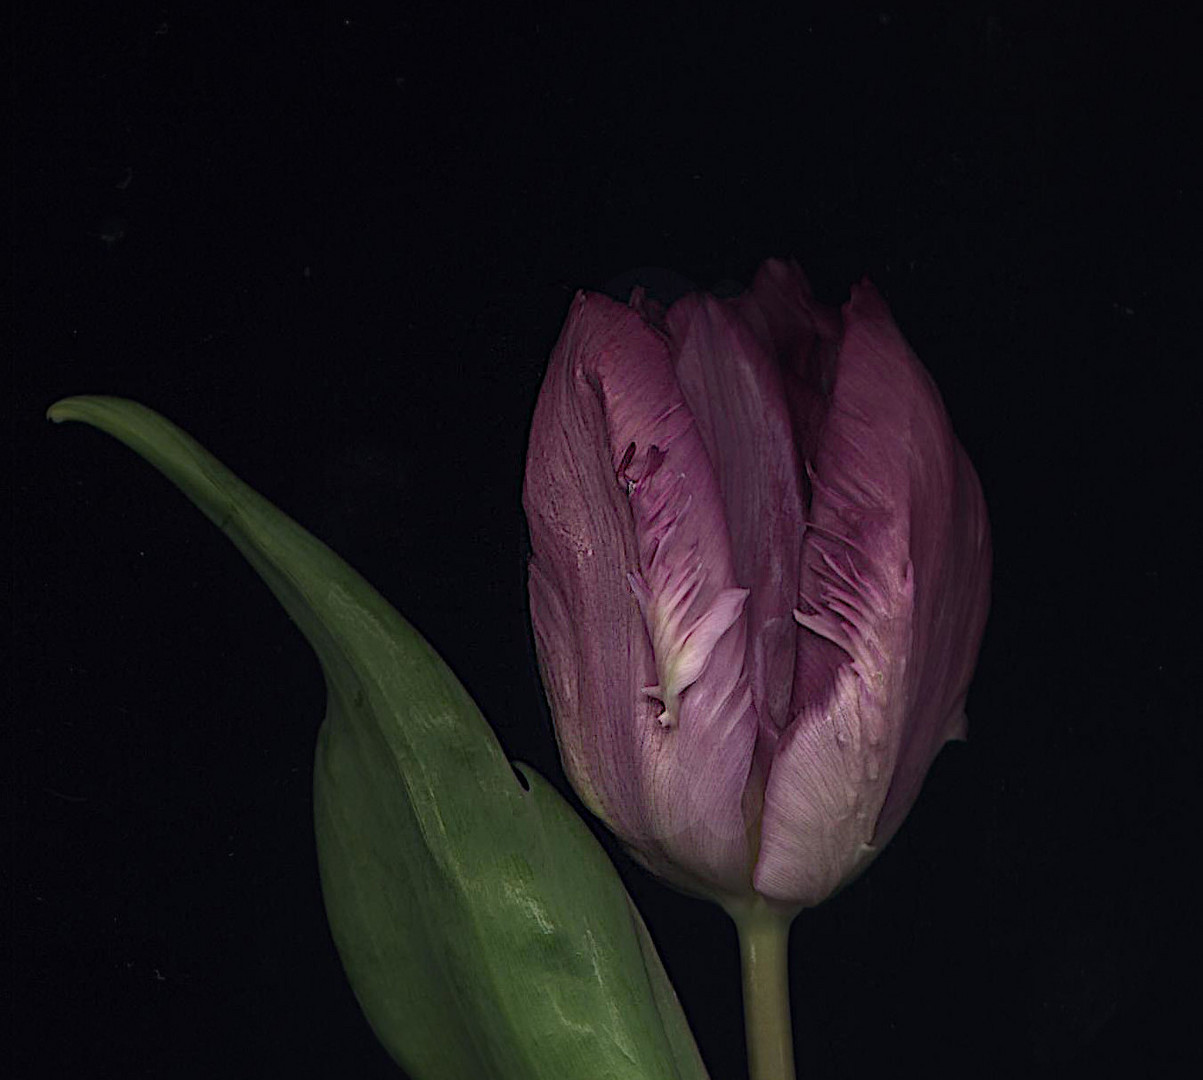 Tulpe gescannt mit dunklem HG